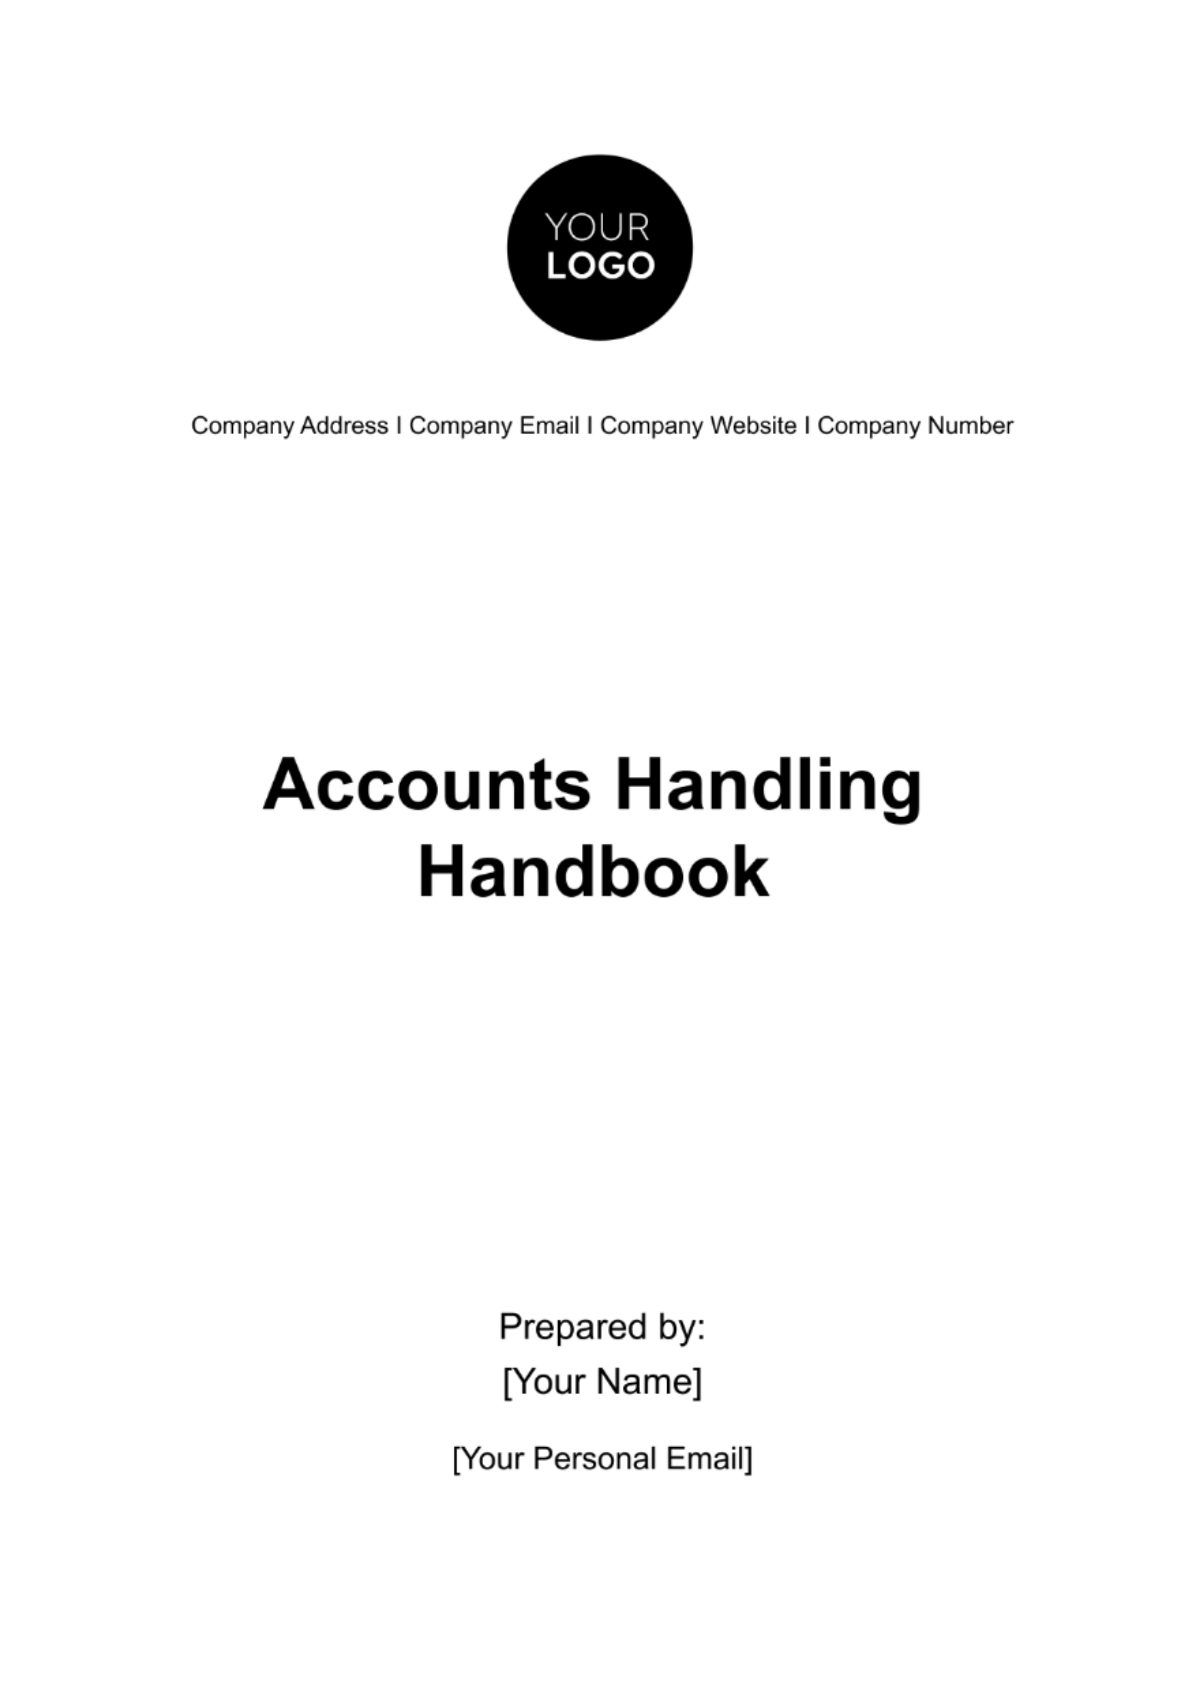 Accounts Handling Handbook Template